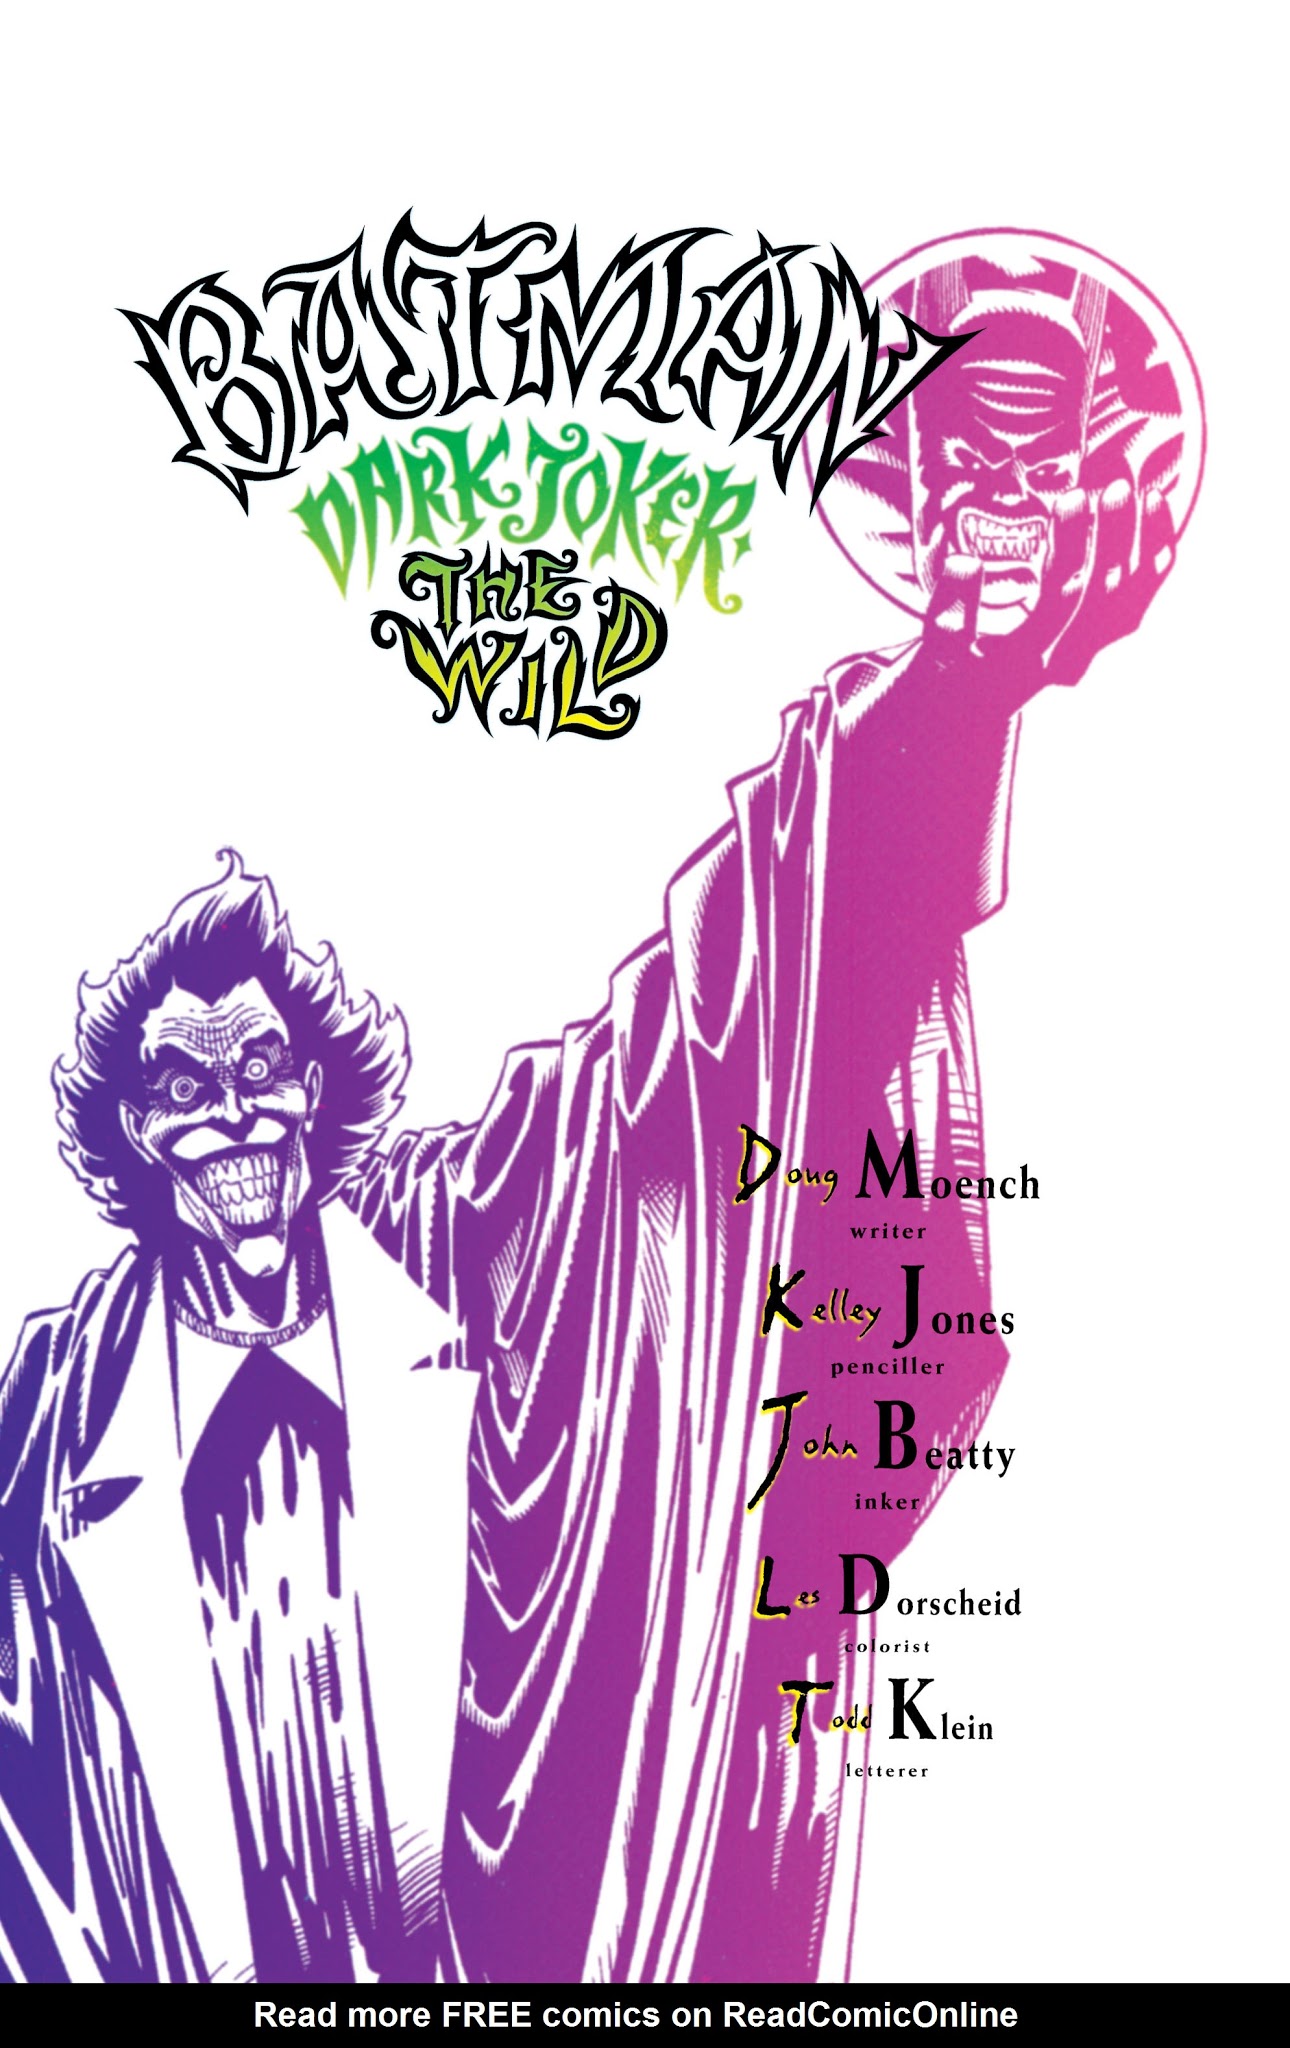 Read online Batman: Dark Joker - The Wild comic -  Issue # TPB - 4